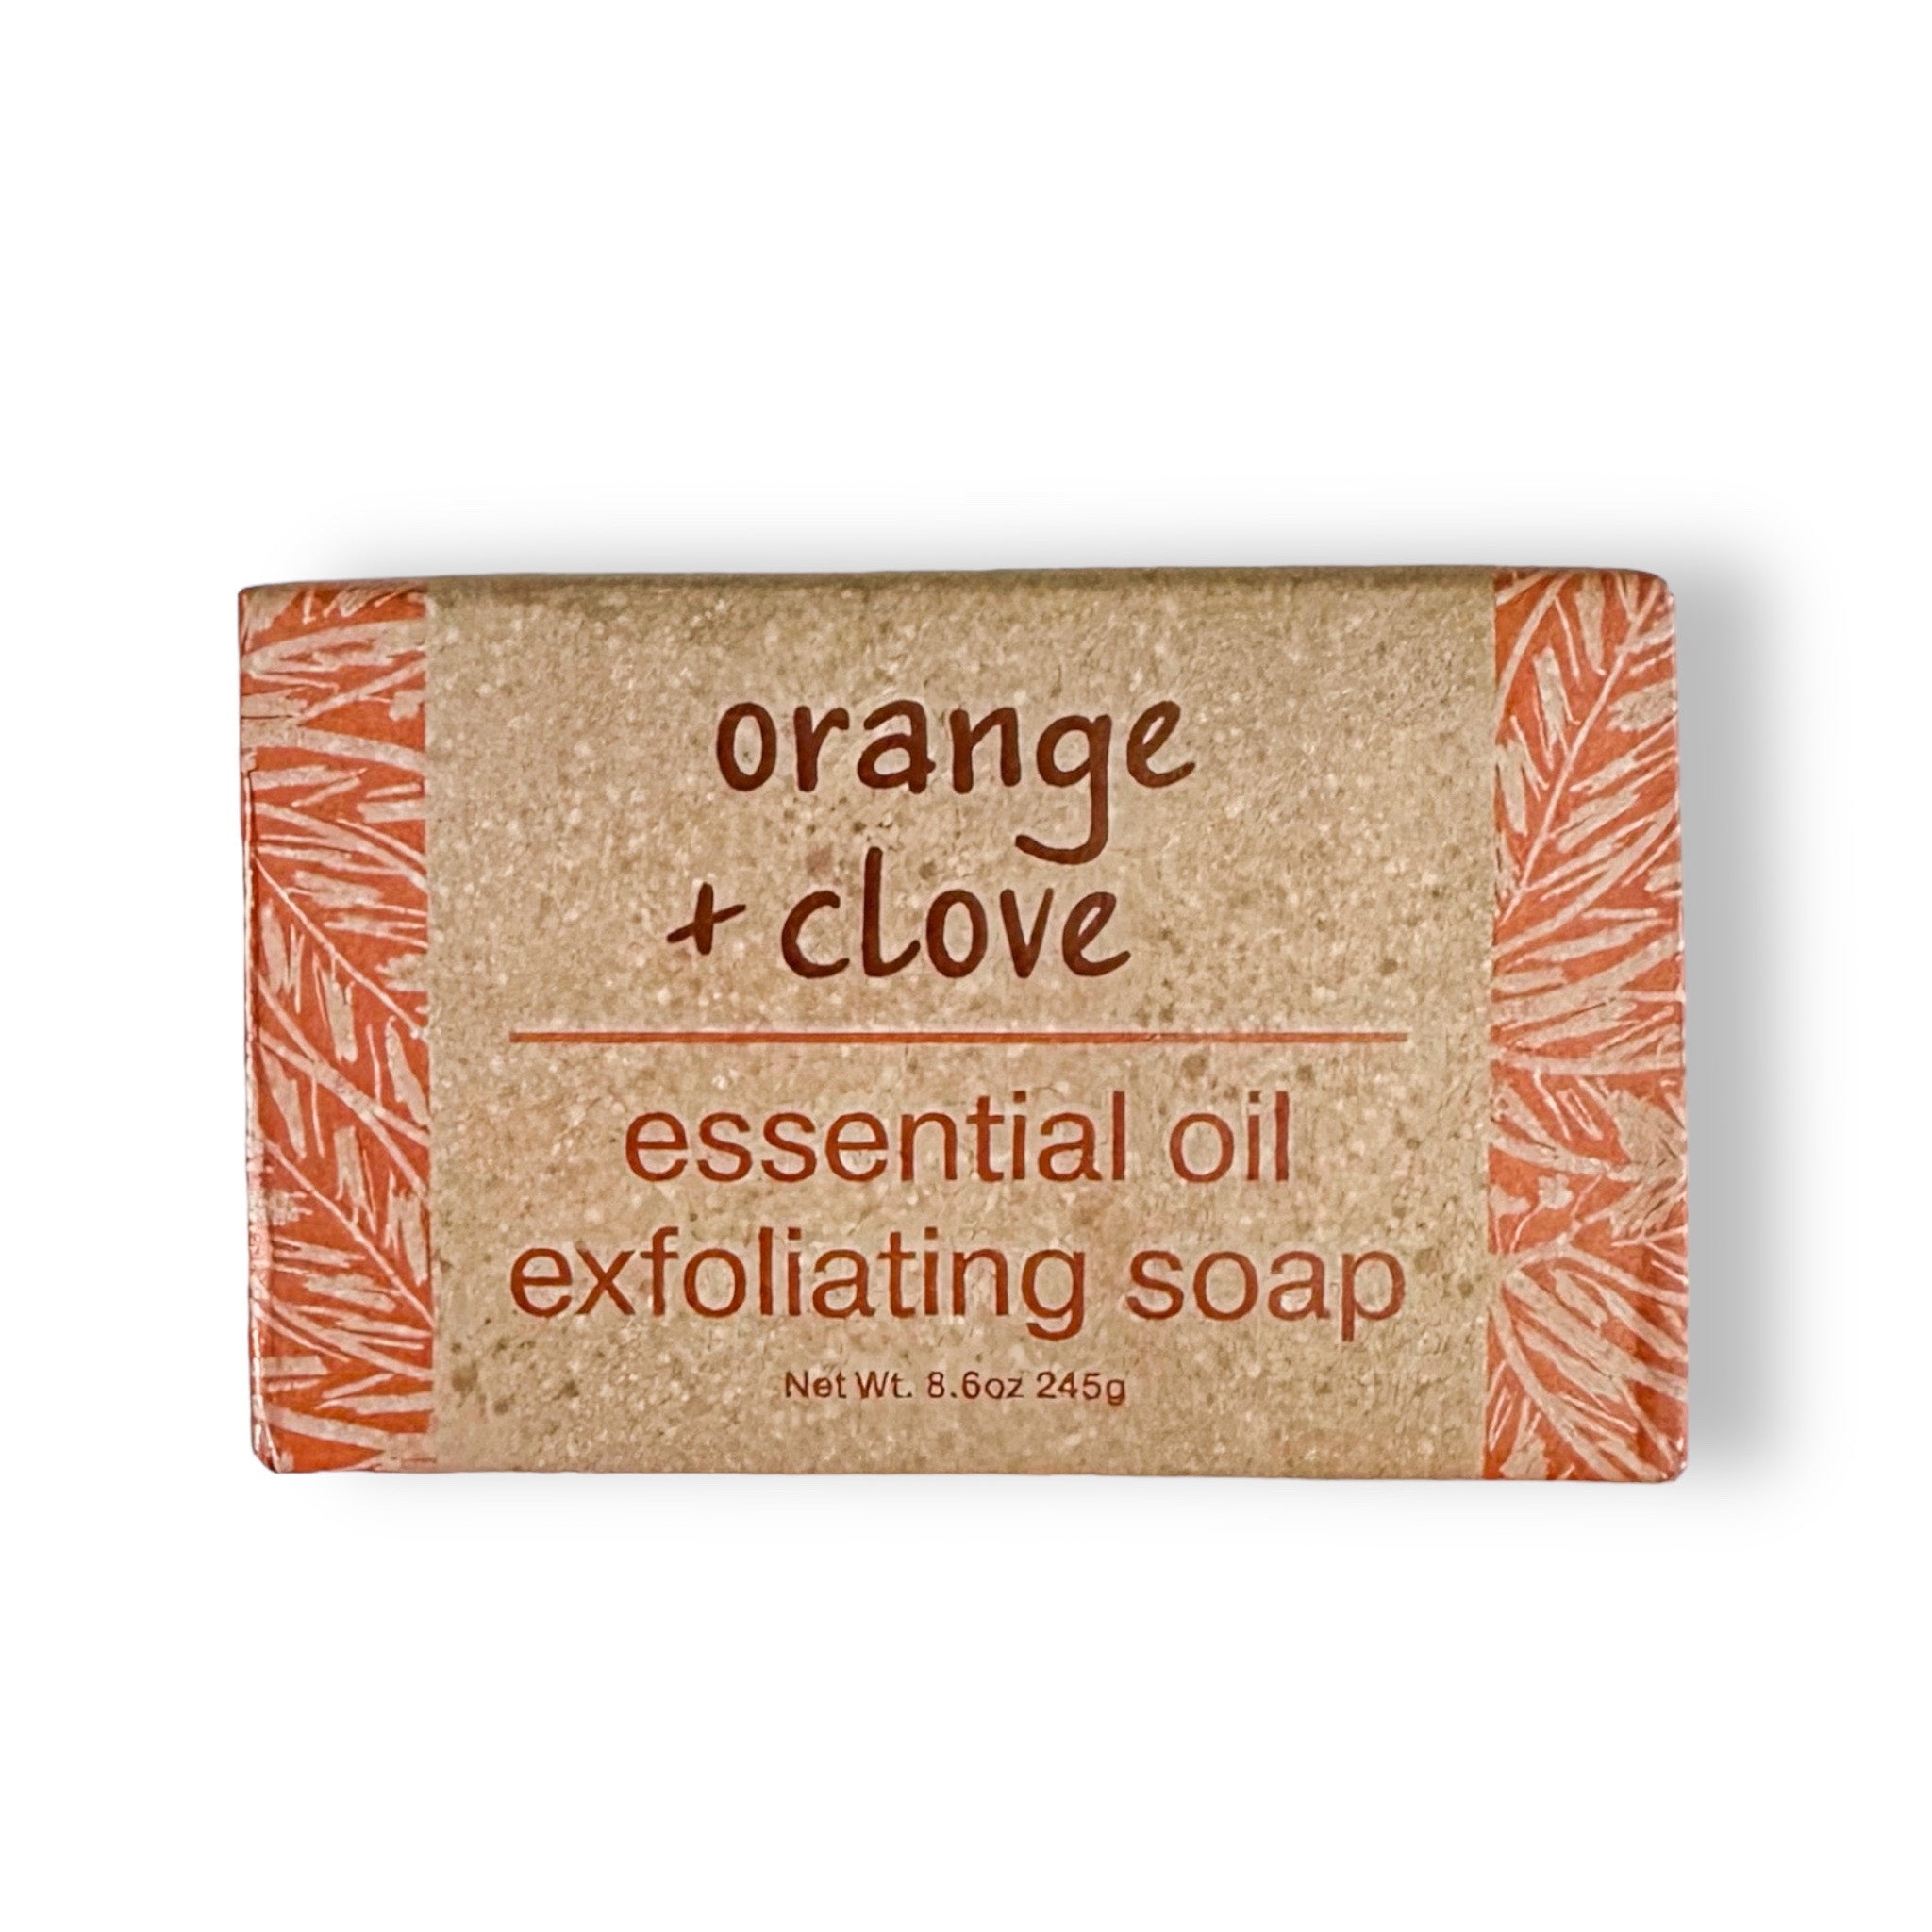 Greenwich Bay Trading Company Orange and Clove Exfoliating Soap 8.6 oz